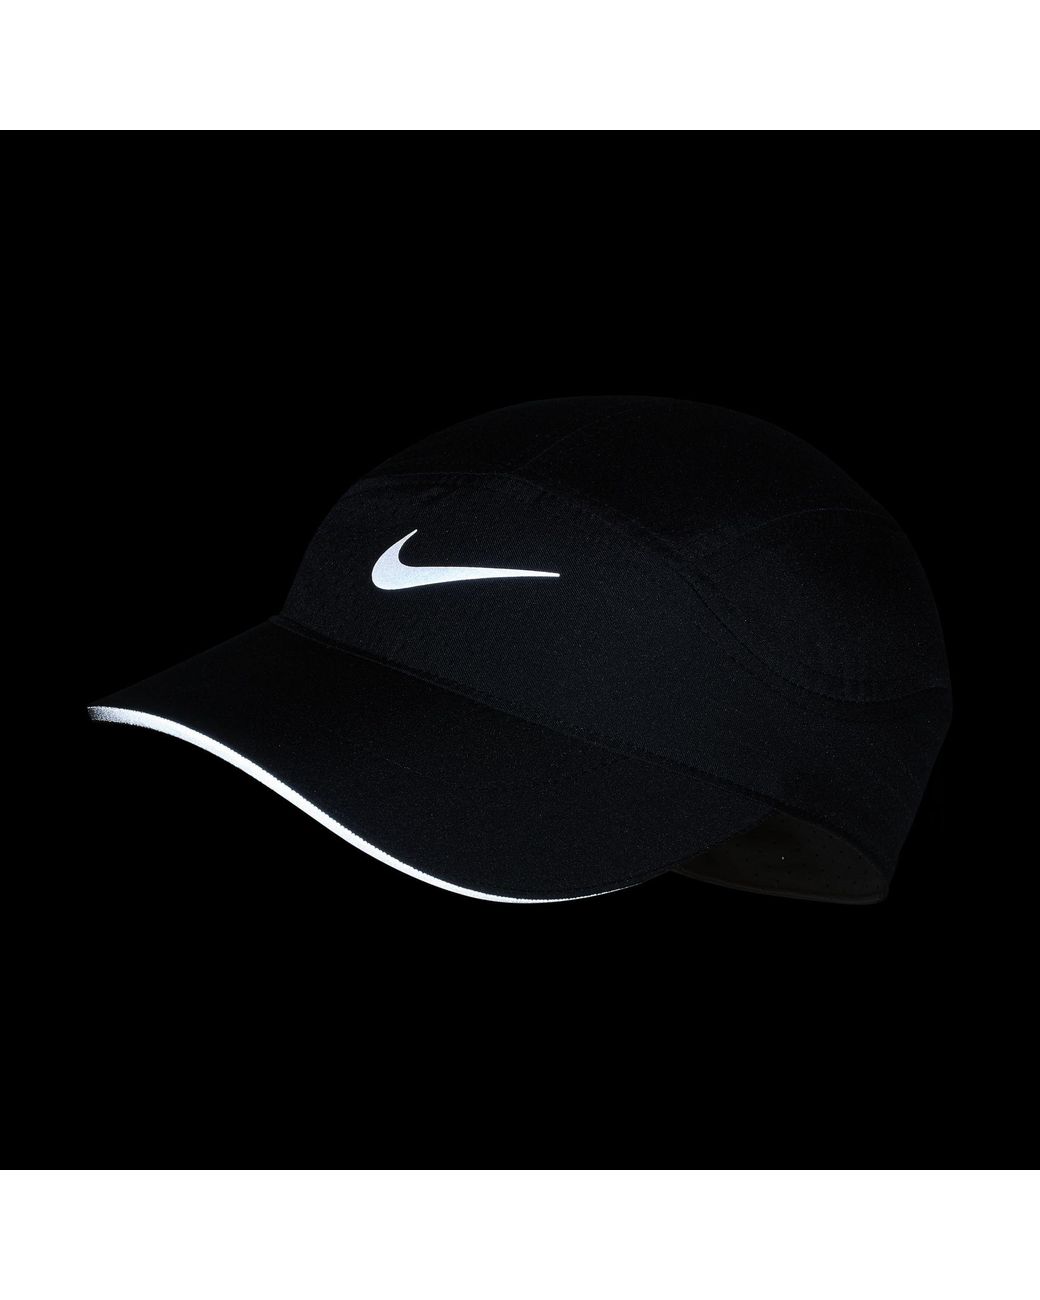 Nike Aerobill Tailwind Elite Baseball Cap in Black | Lyst Australia